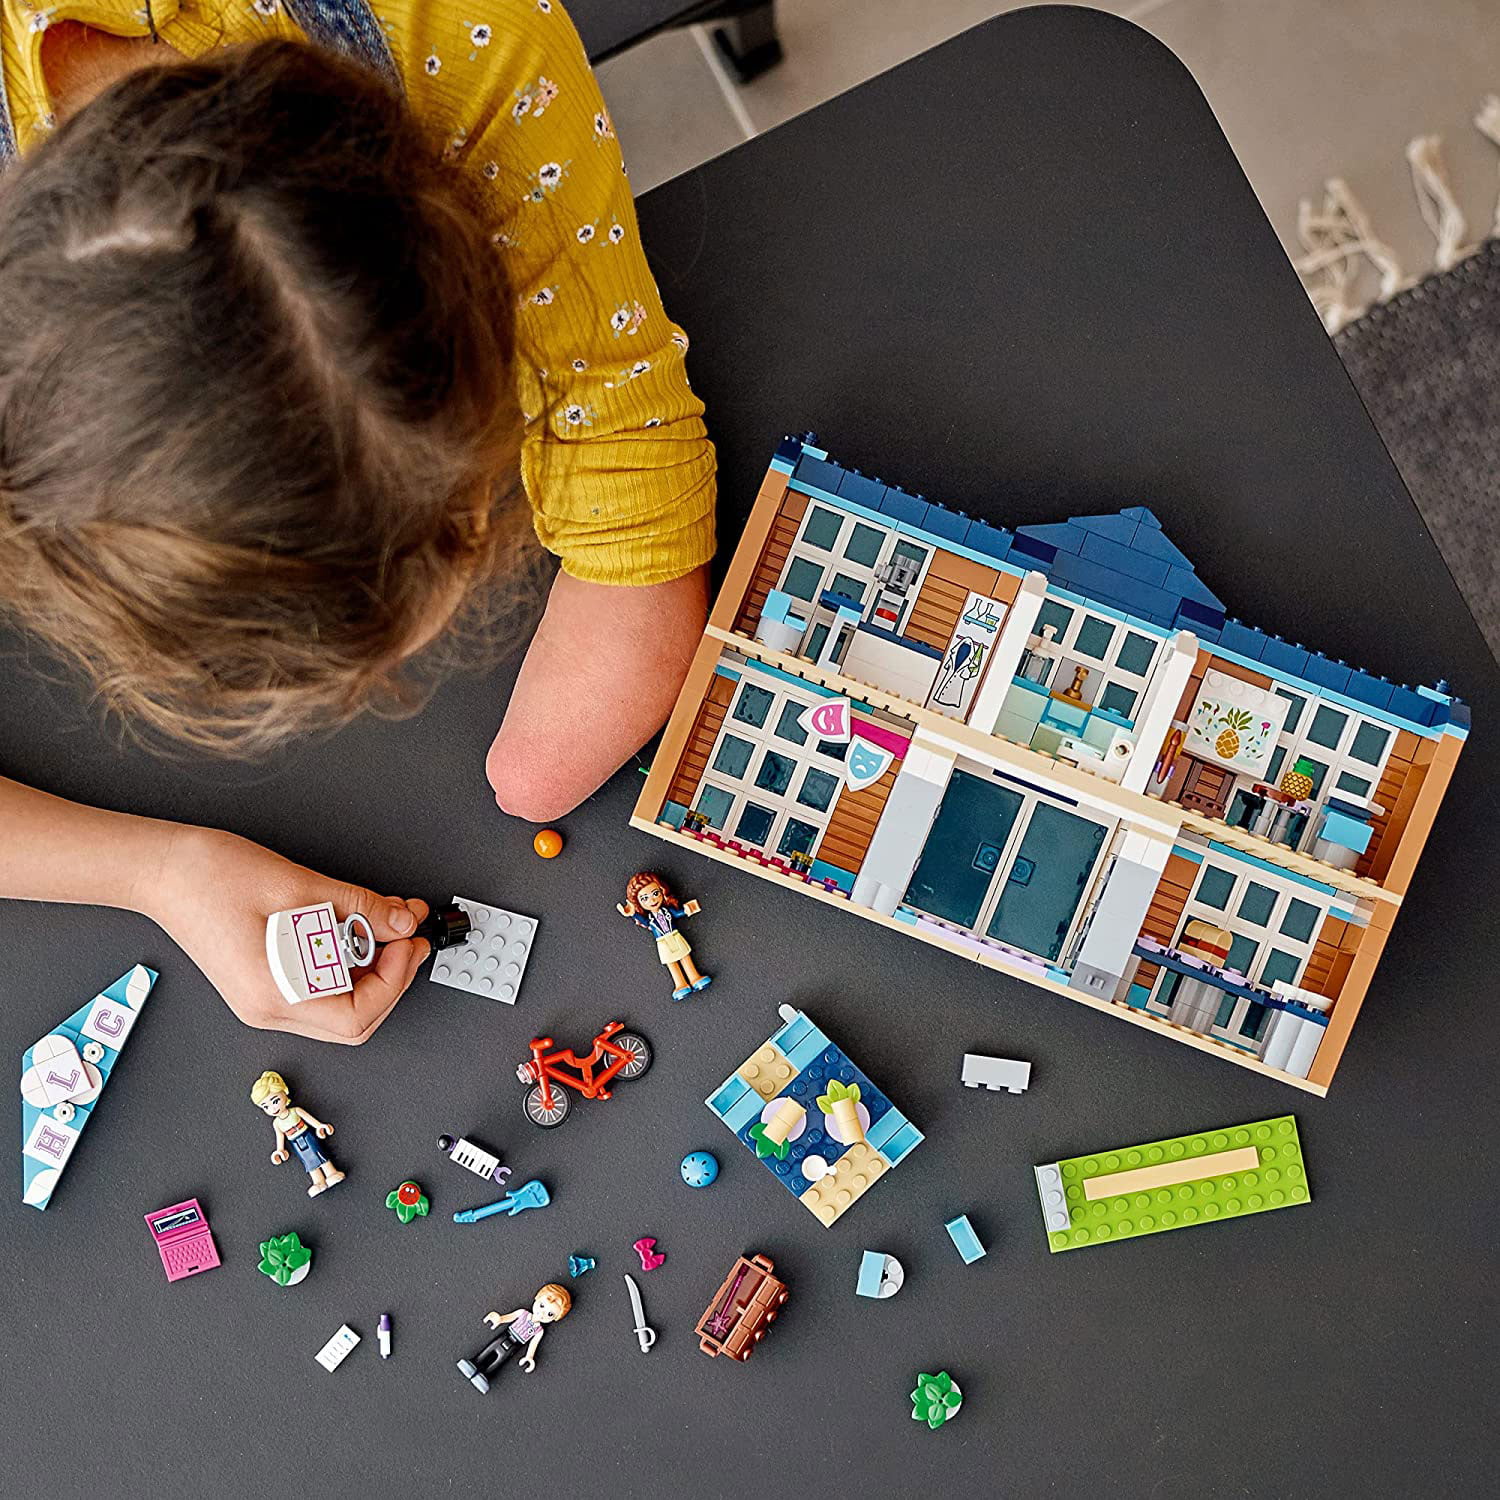 LEGO Friends Heartlake City School 41682 Building Toy for Play (605 Pieces) - Walmart.com